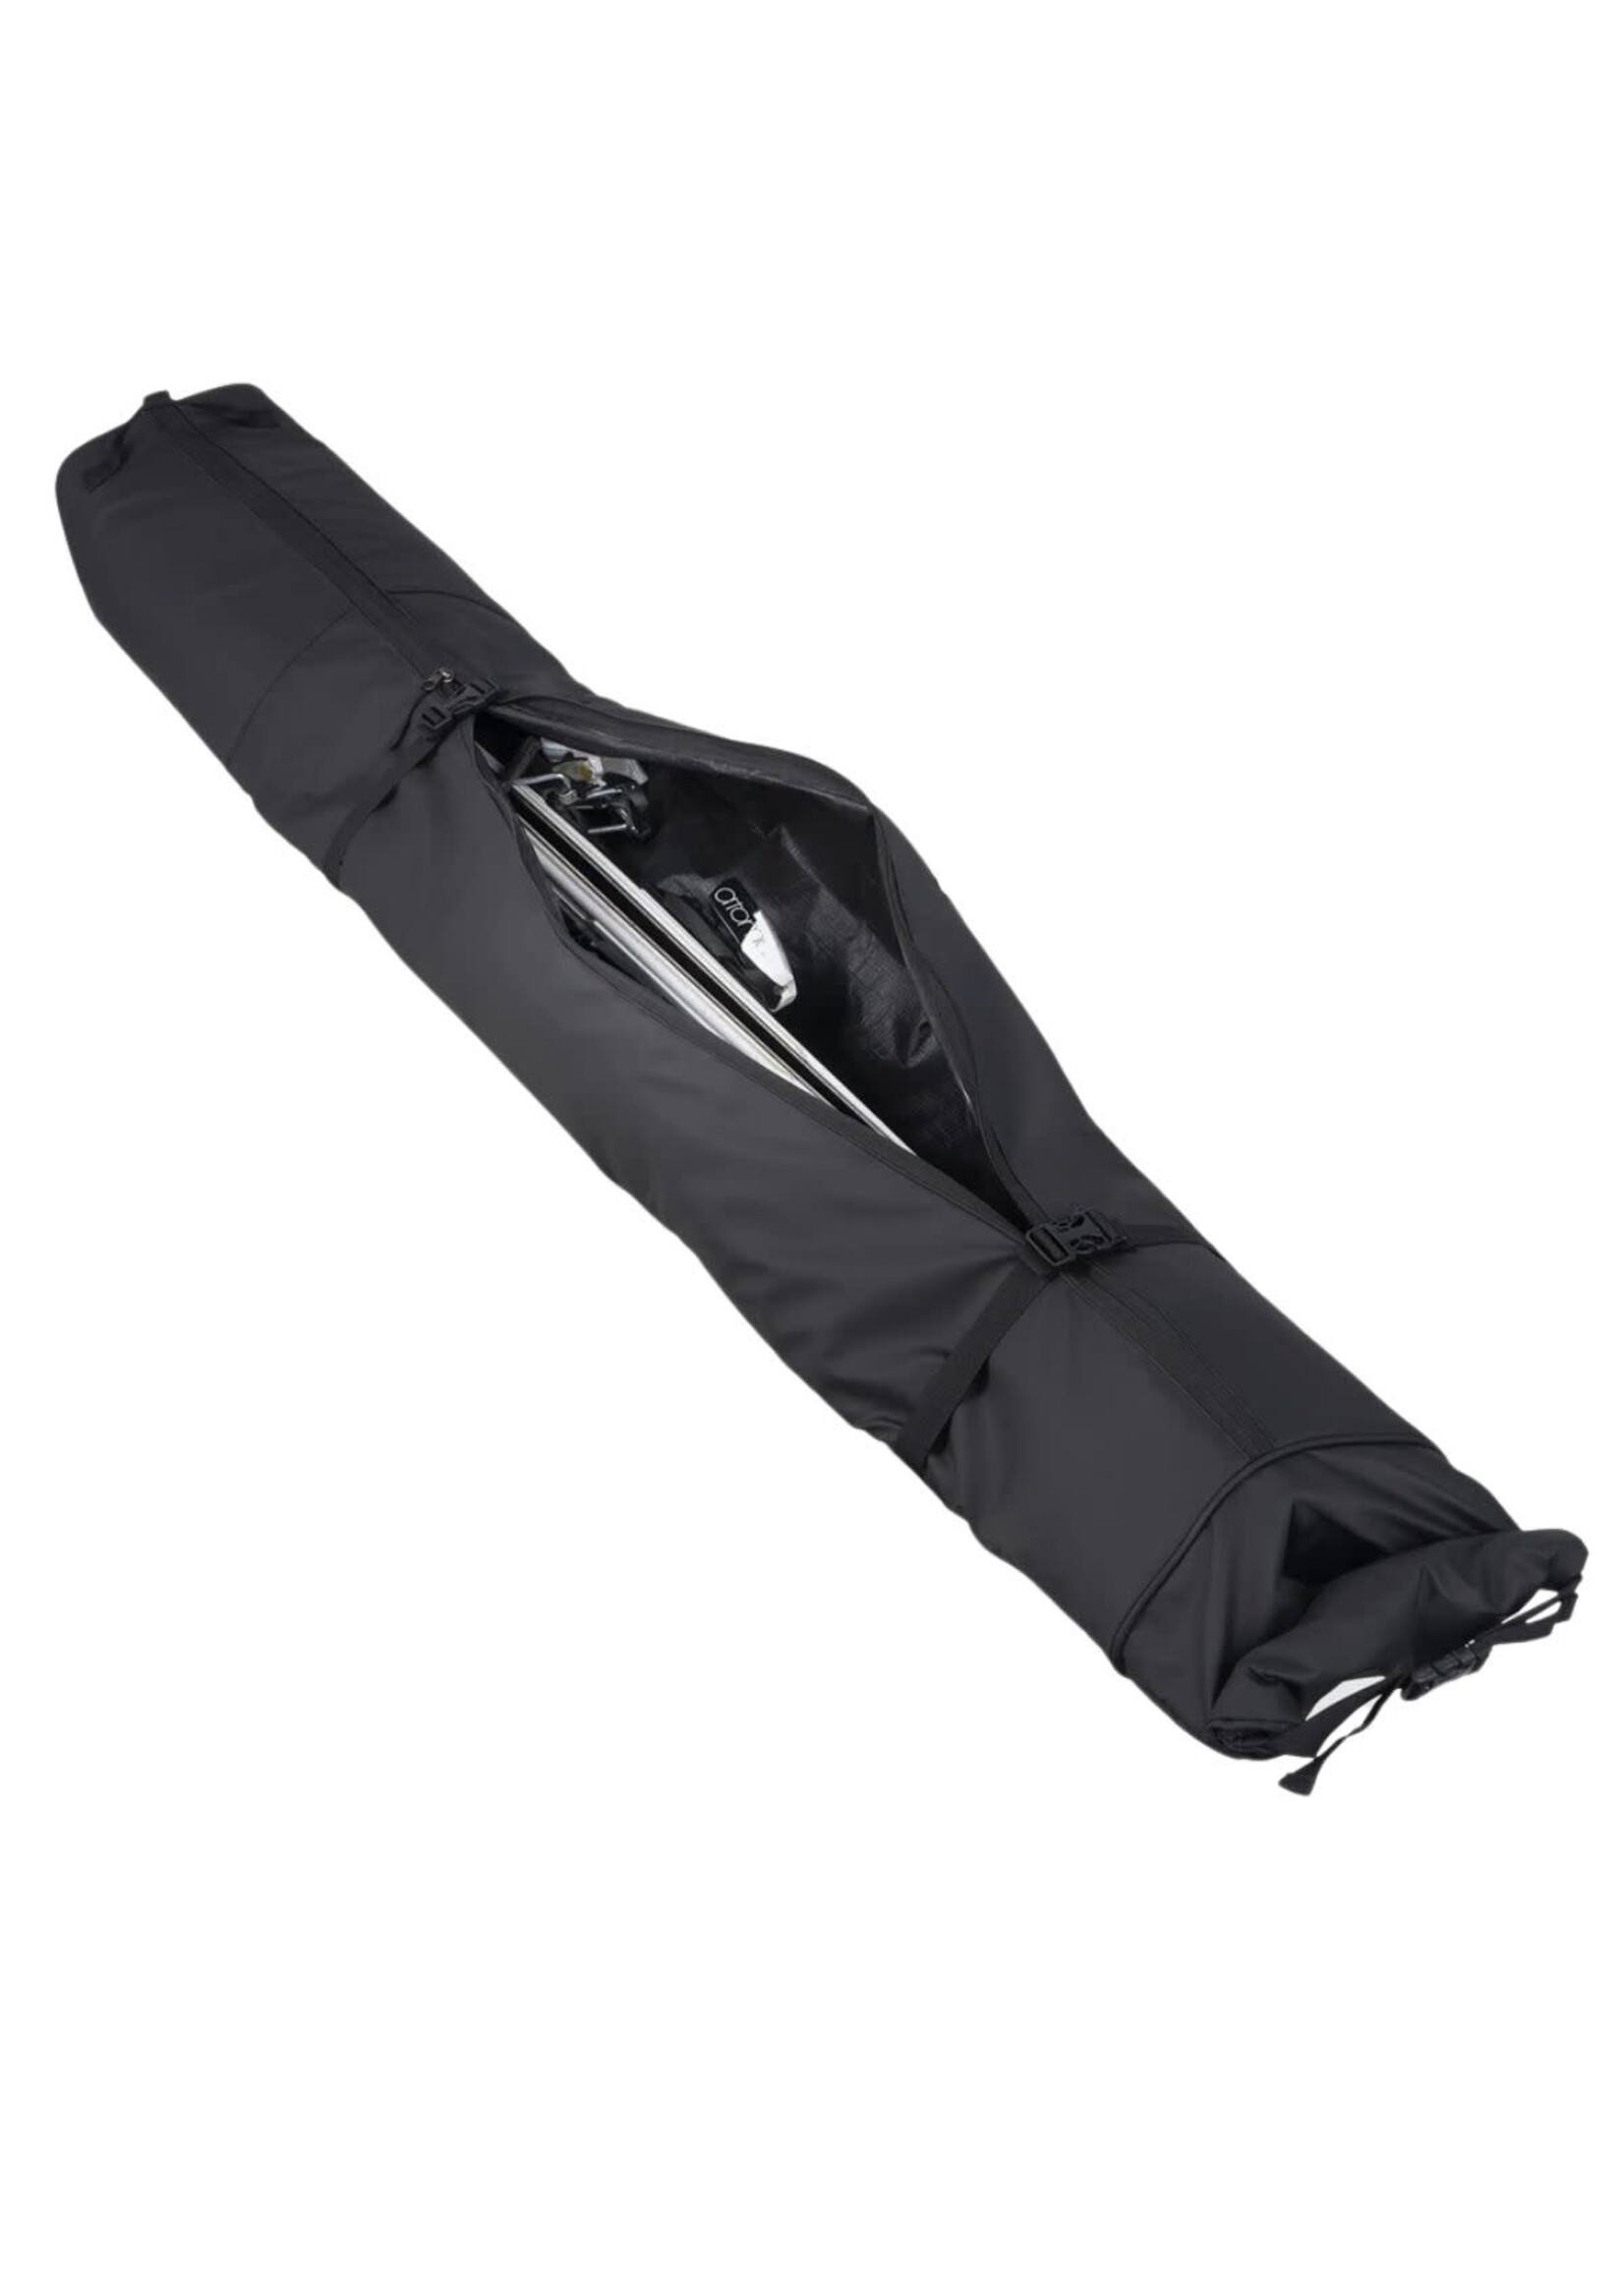 K&B K&B Adjustable Single Padded Ski Bag